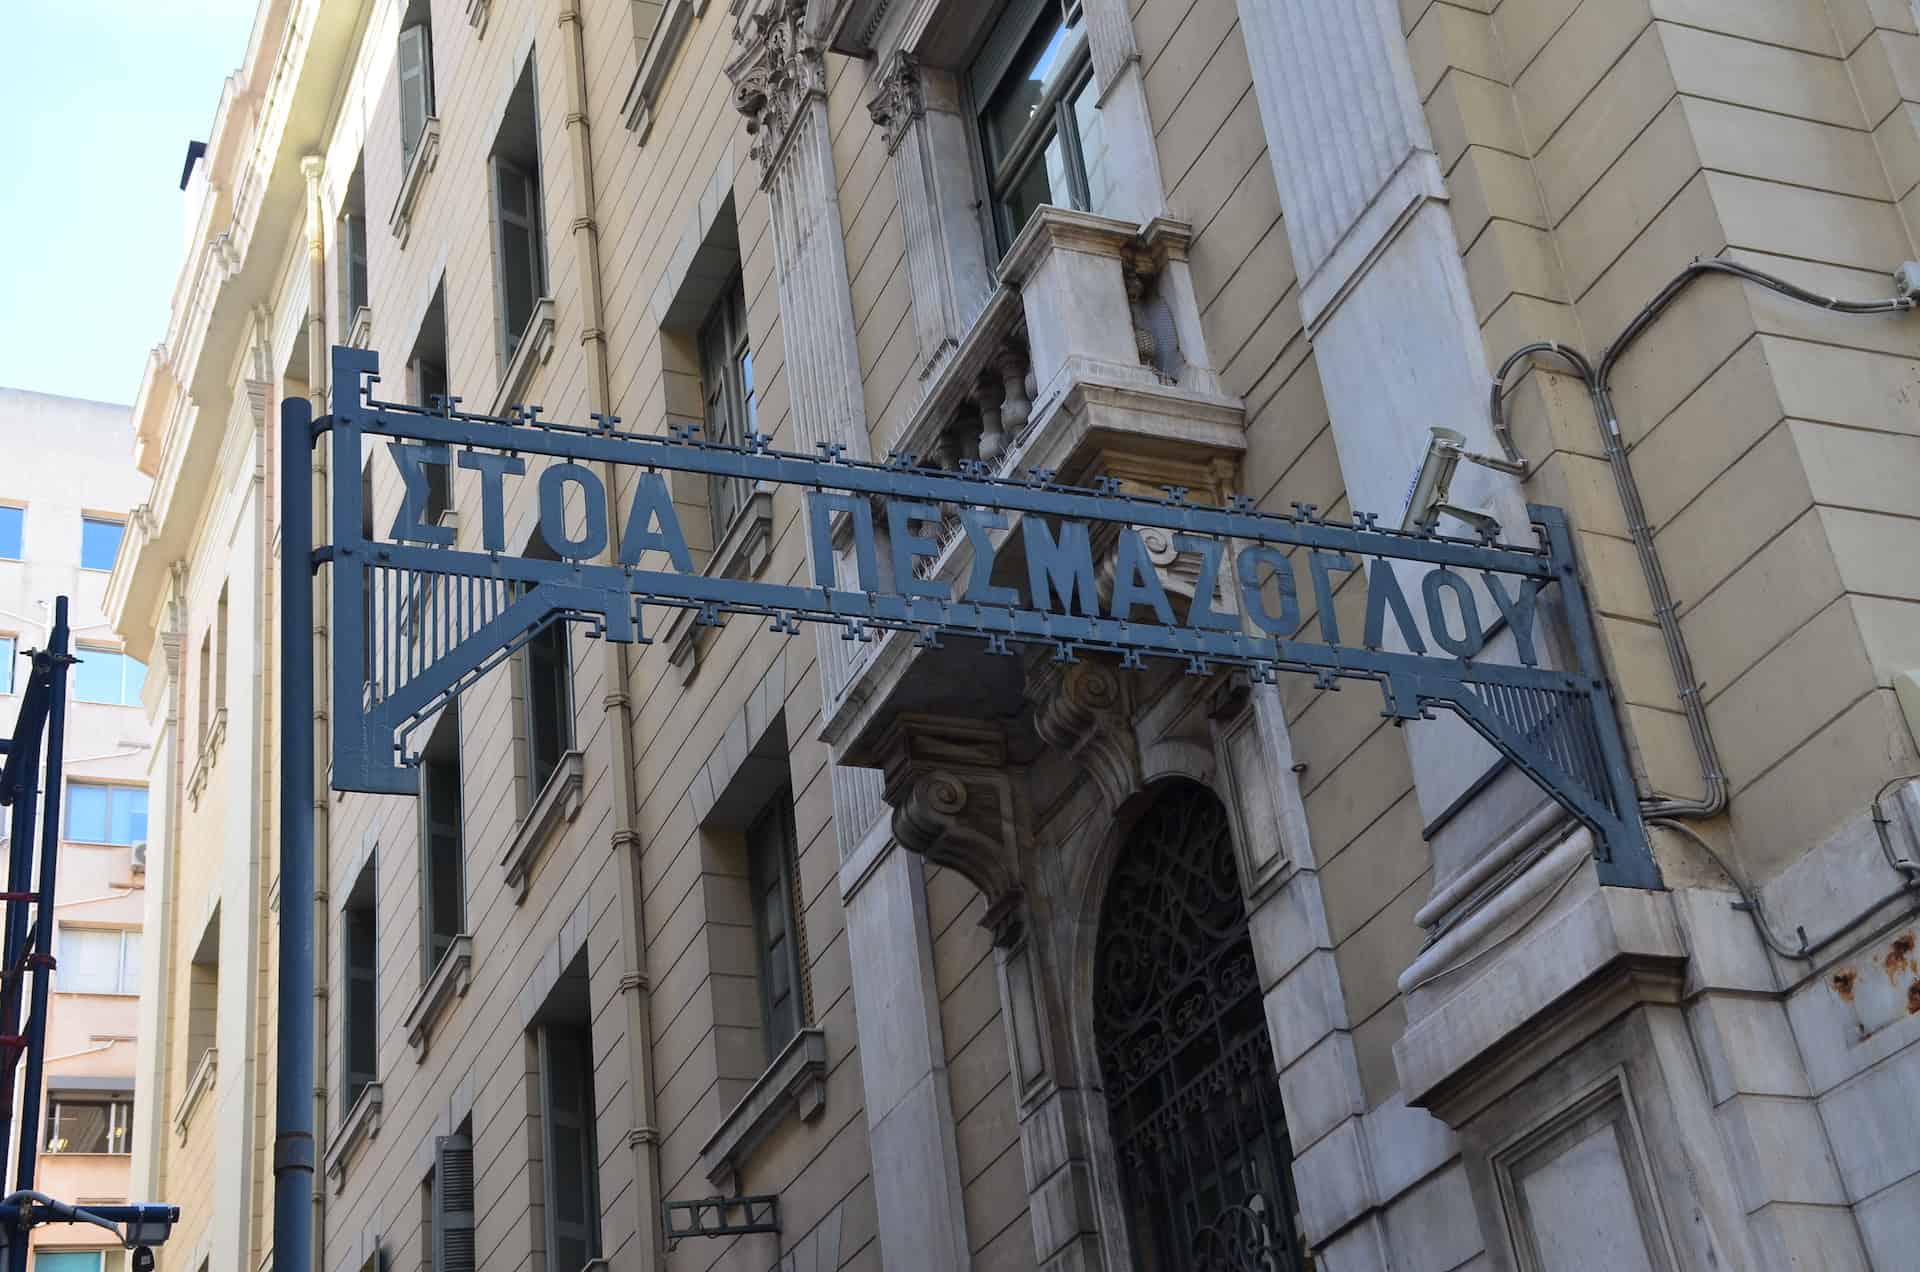 Sign on Stadiou indicating the rear entrance to Stoa Pesmazoglou